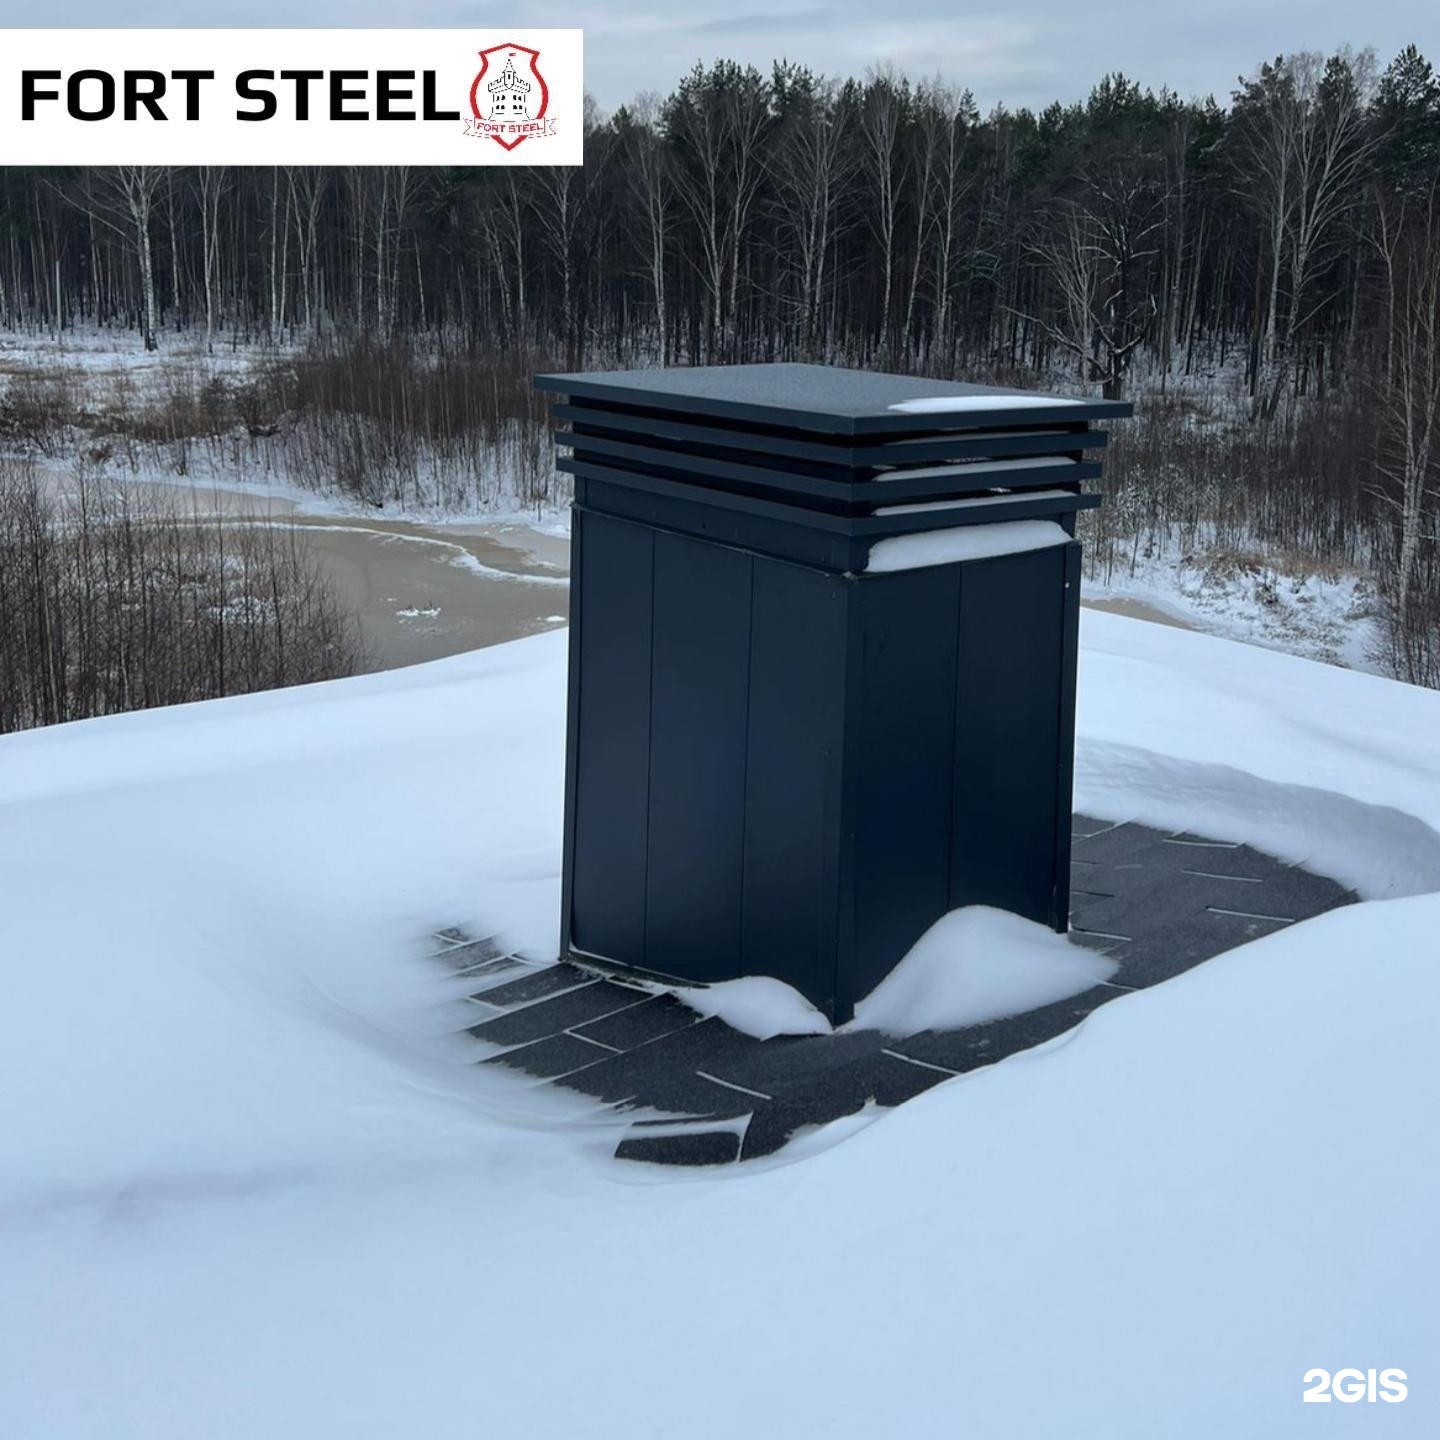 Fort steel